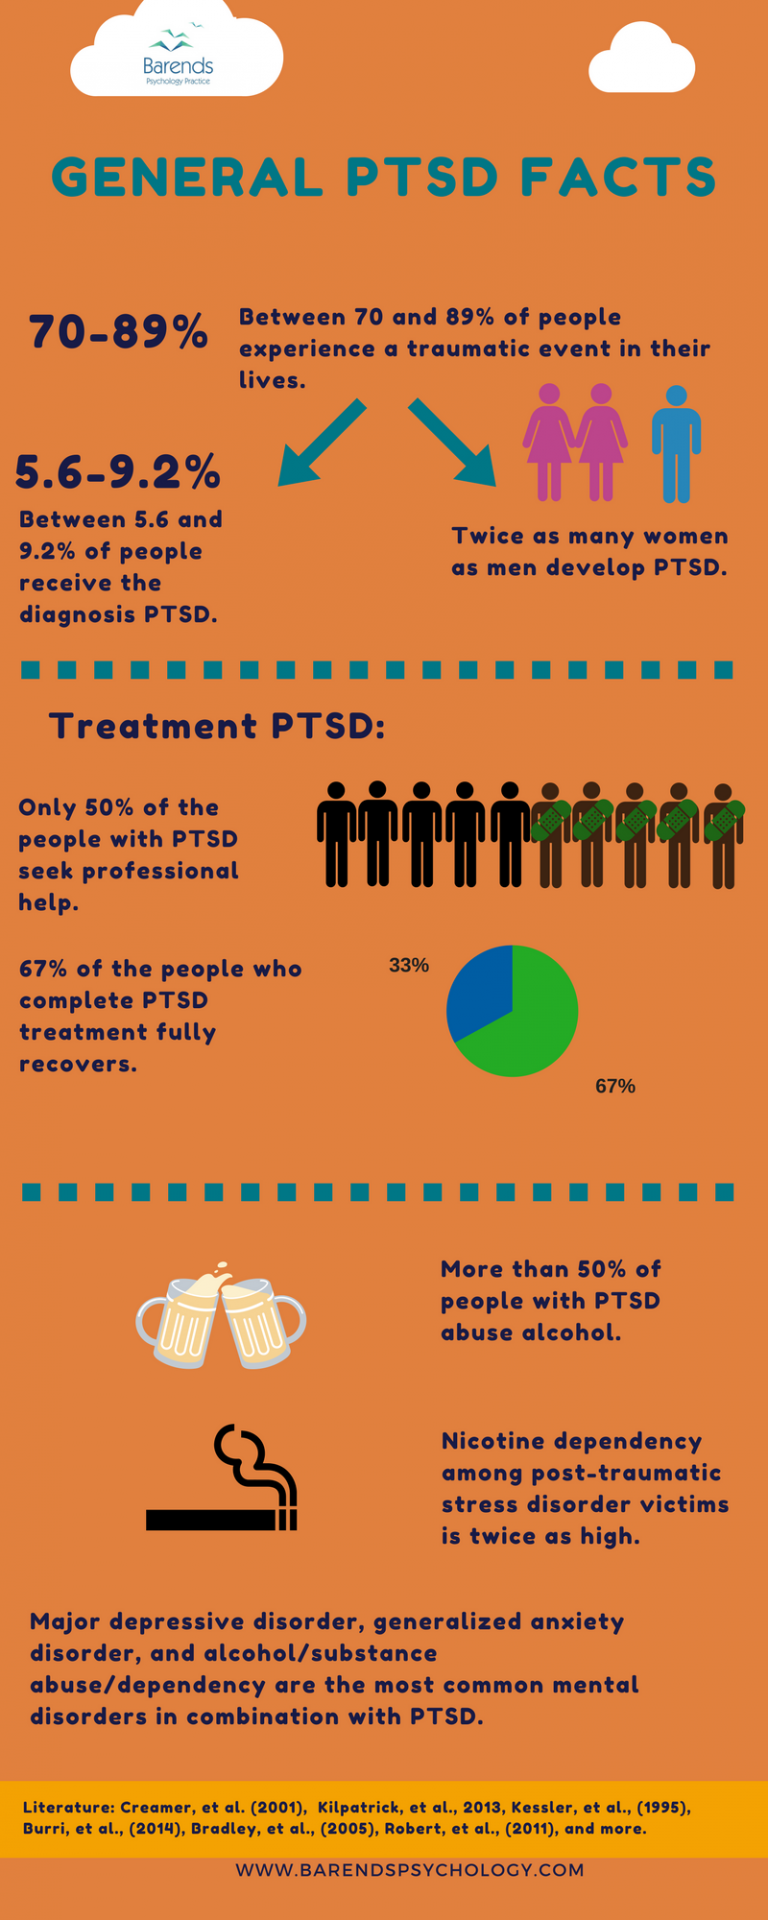 Posttraumatic stress disorder statistics of Europe, USA, treatment & more.